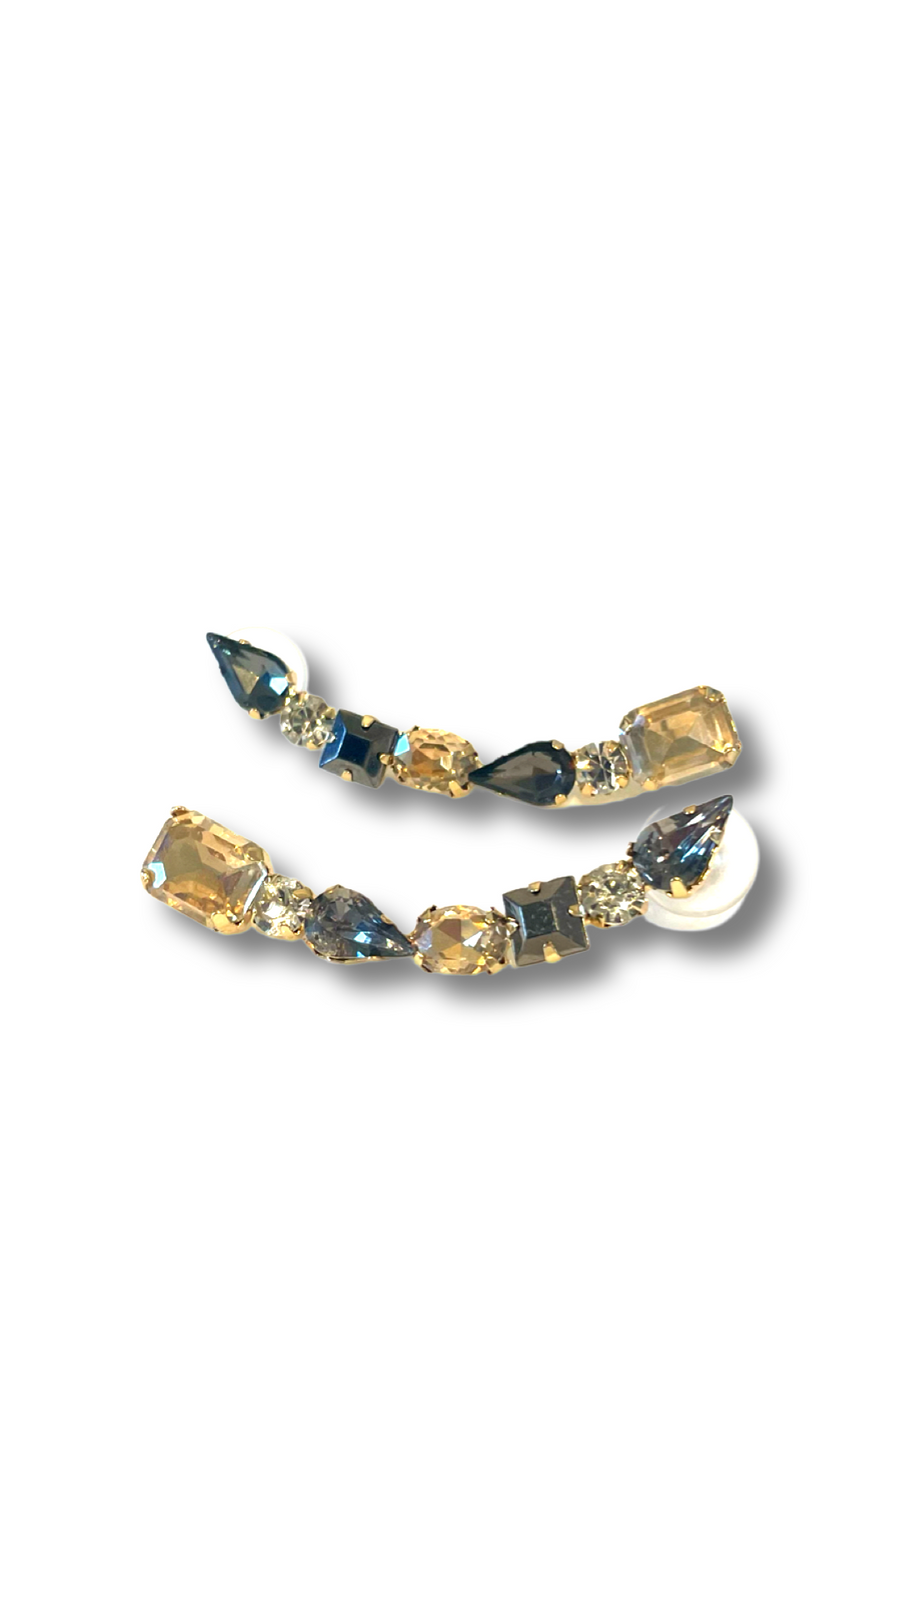 Curved crystal earrings